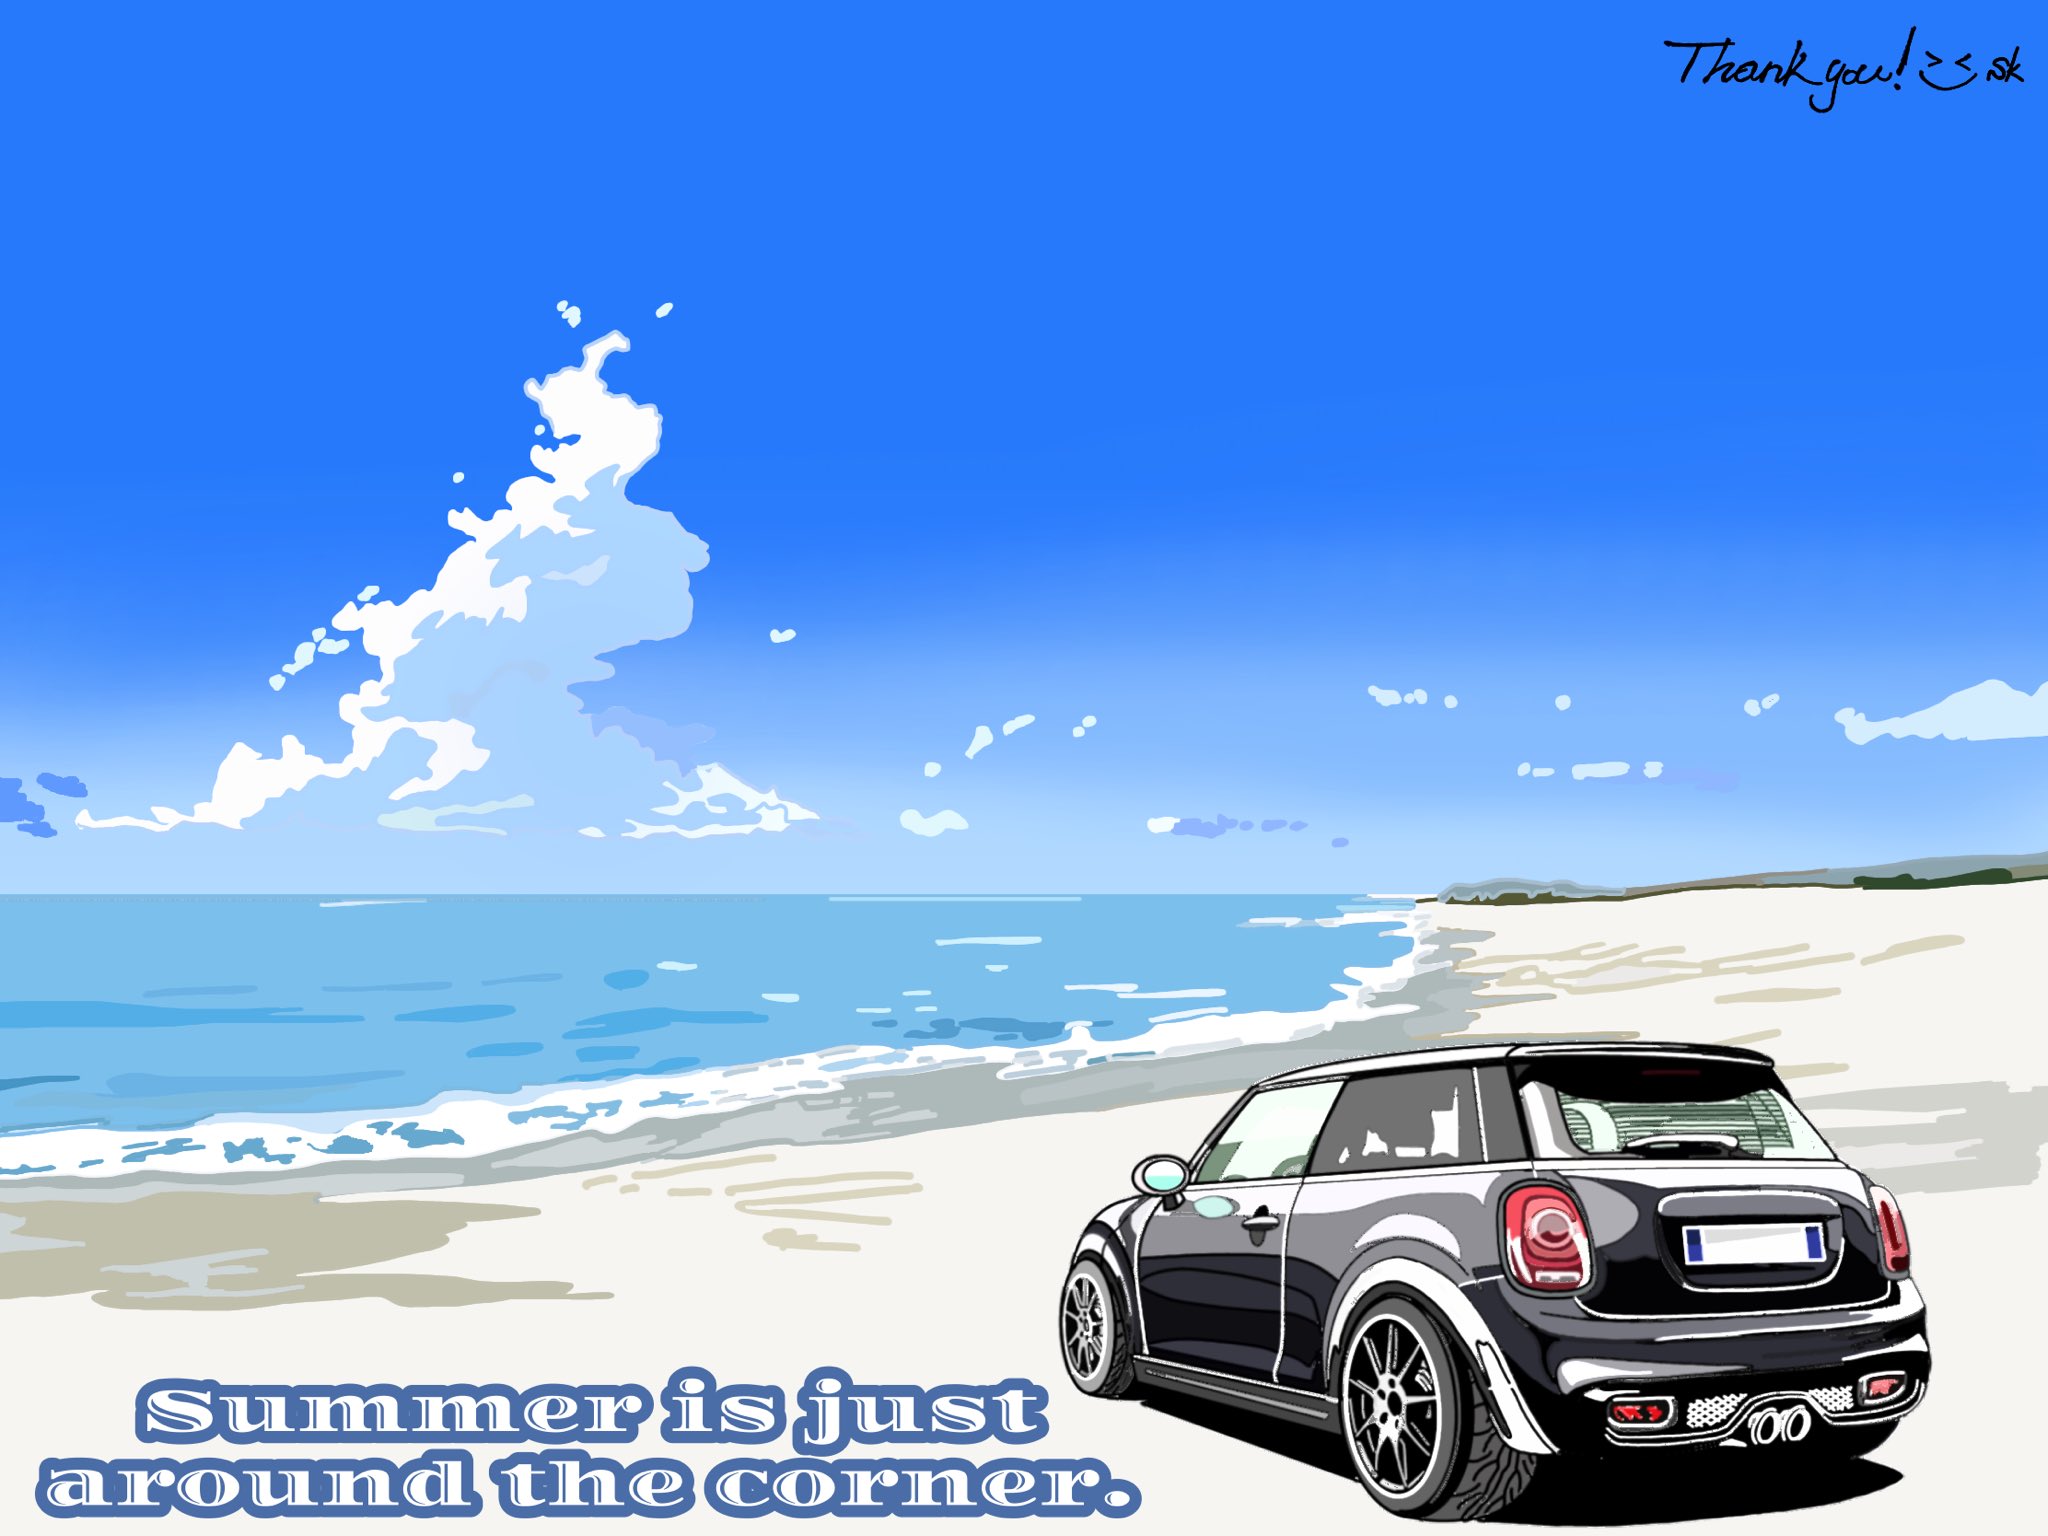 Twitter 上的 Stm5k Minicooper Mini Cooper Car ミニクーパー 夏空 車 オリジナルイラスト T Co Hklrsisgs7 Twitter